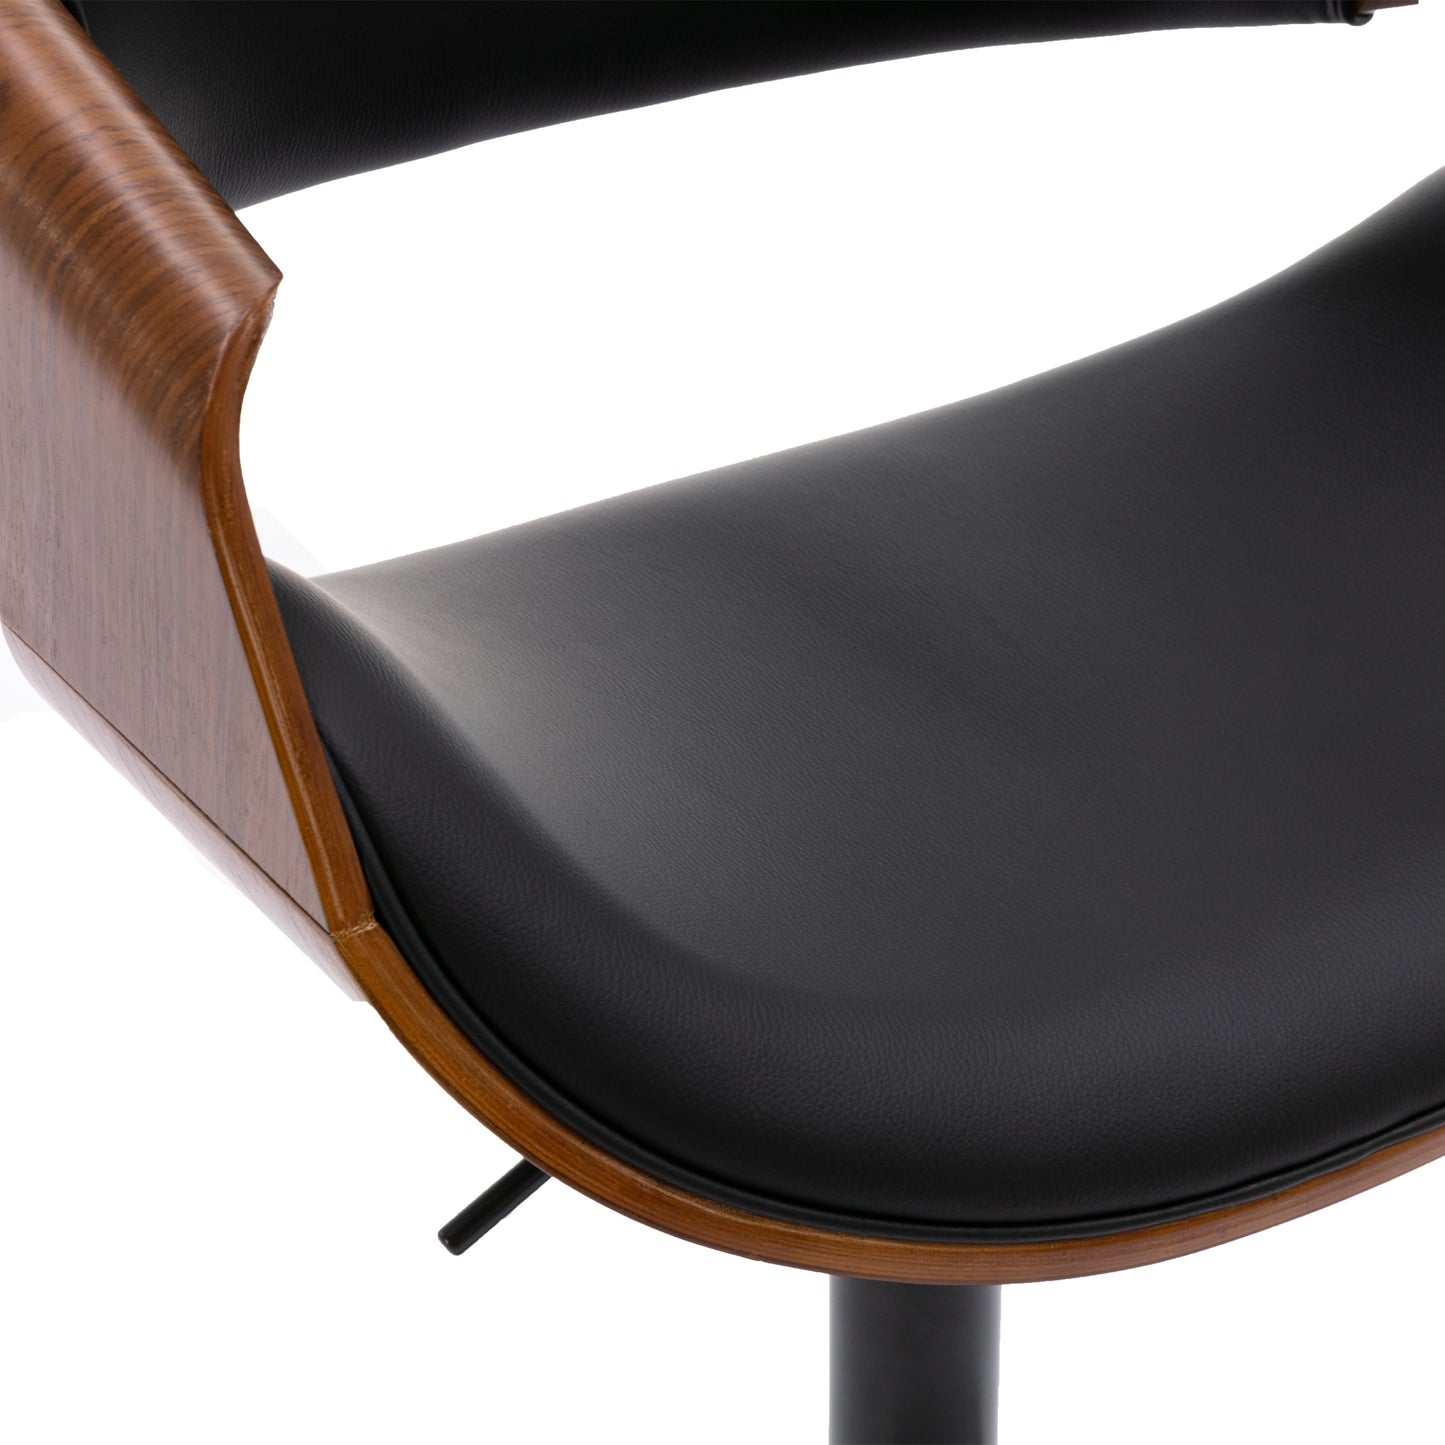 HengMing Adjustable/Swivel Bar Stool, PU Leather black Bent wood Bar Chair 1pcs/ctn.